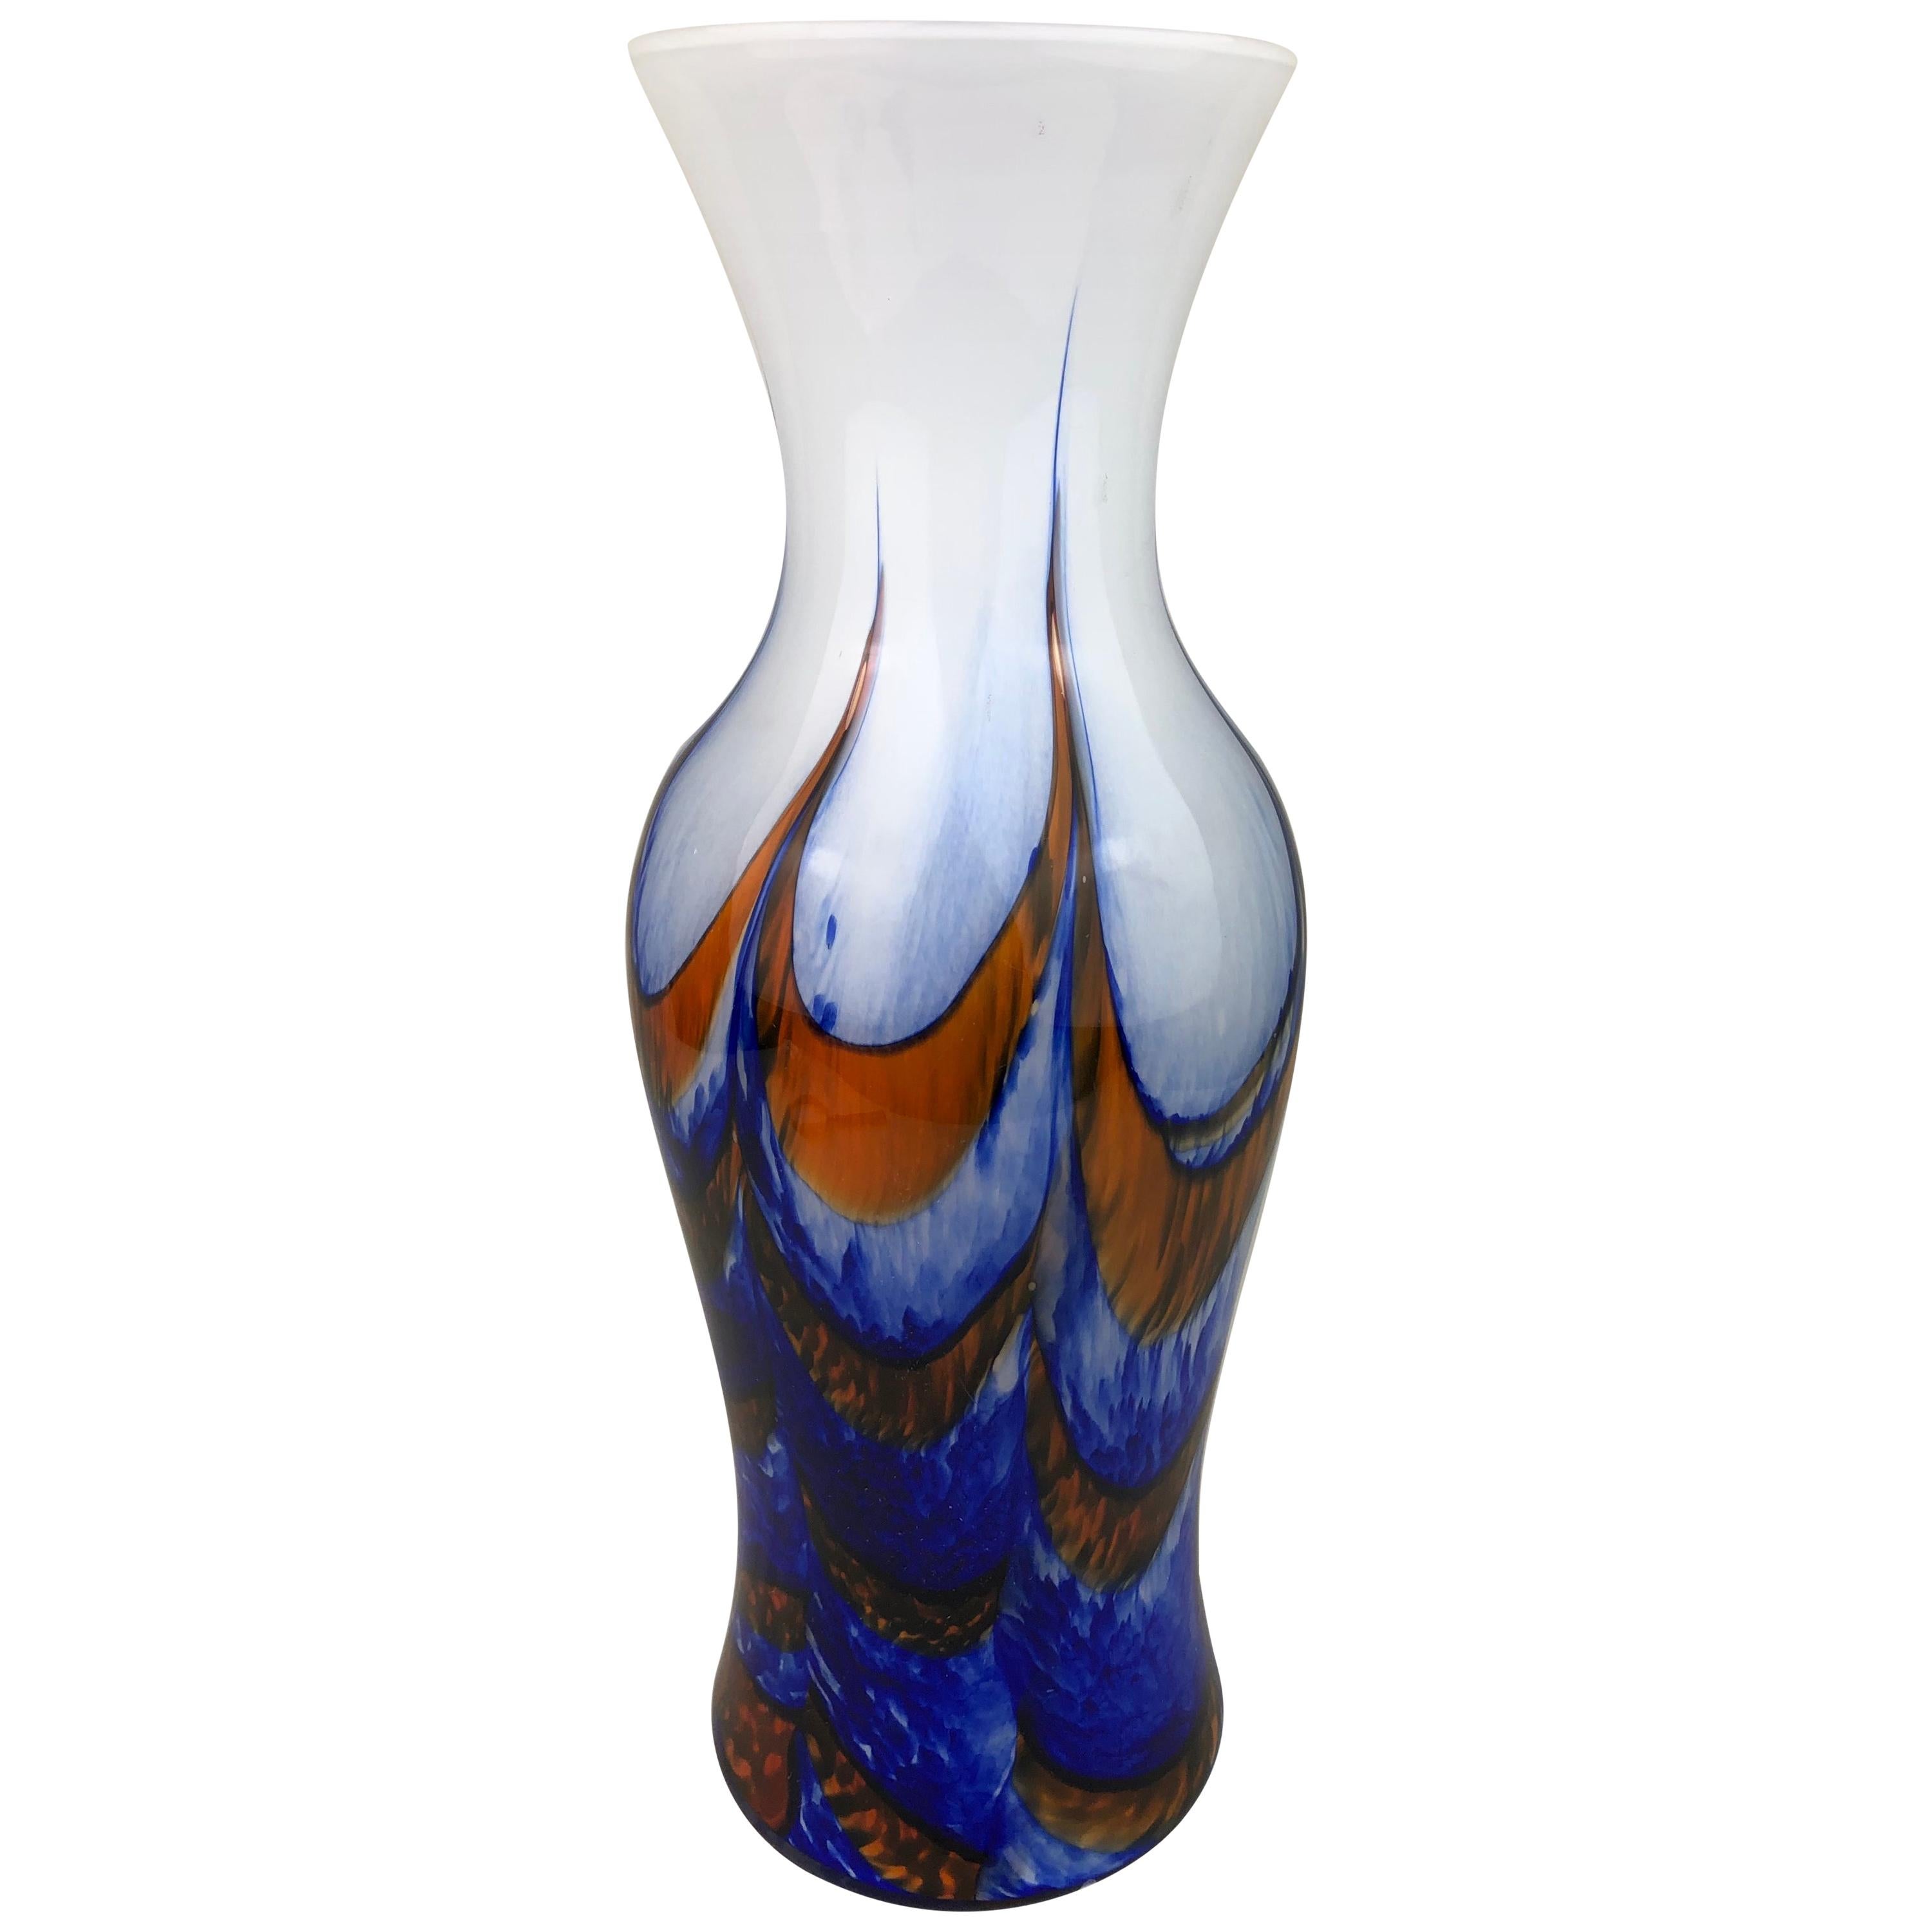 Tall French Midcentury Art Glass Vase Attributed to Schneider Glassworks